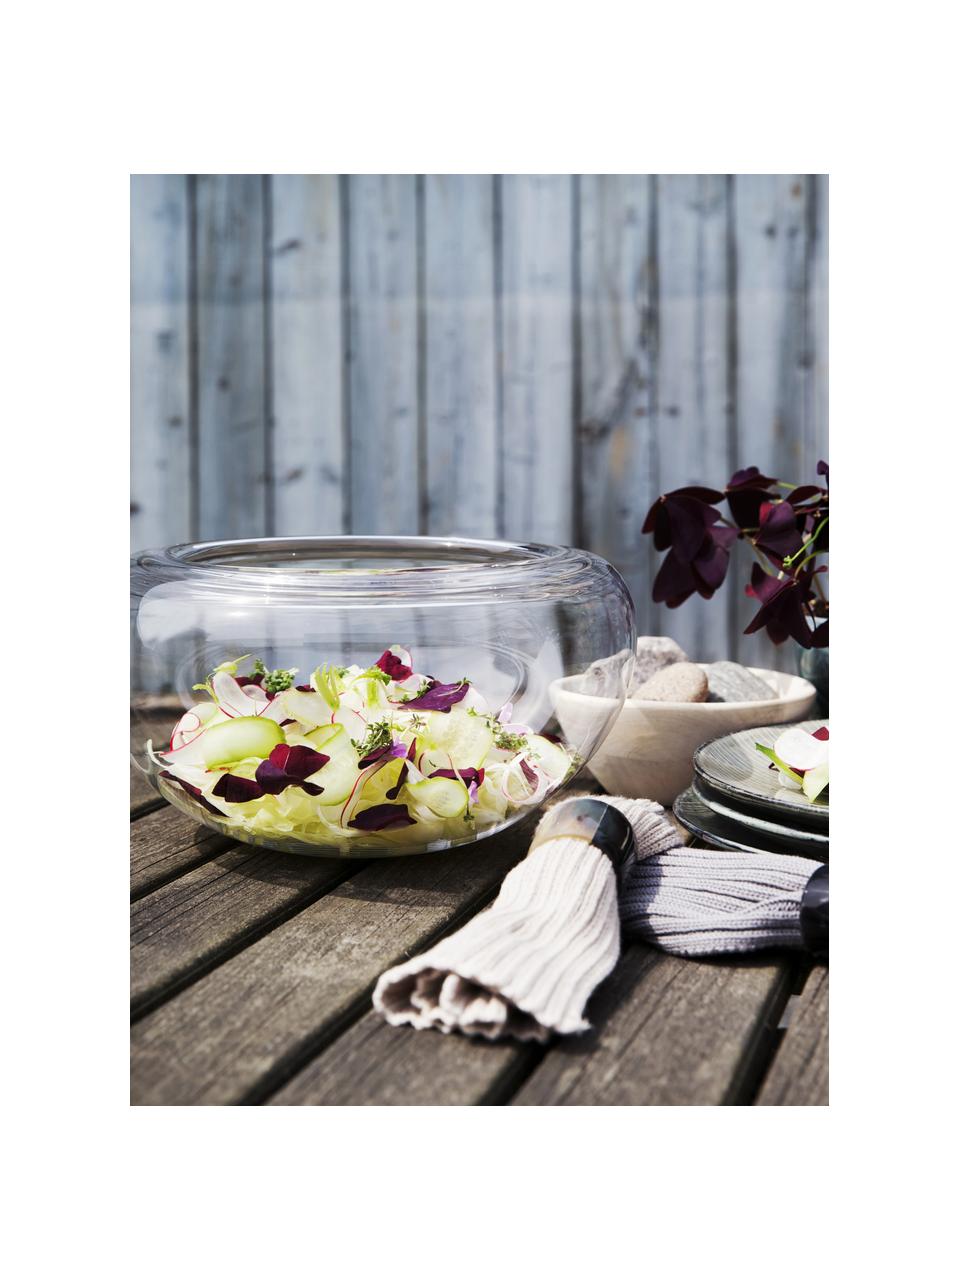 Mondgeblazen saladeschaal Provence, Mondgeblazen glas, Transparant, Ø 31 x H 18 cm